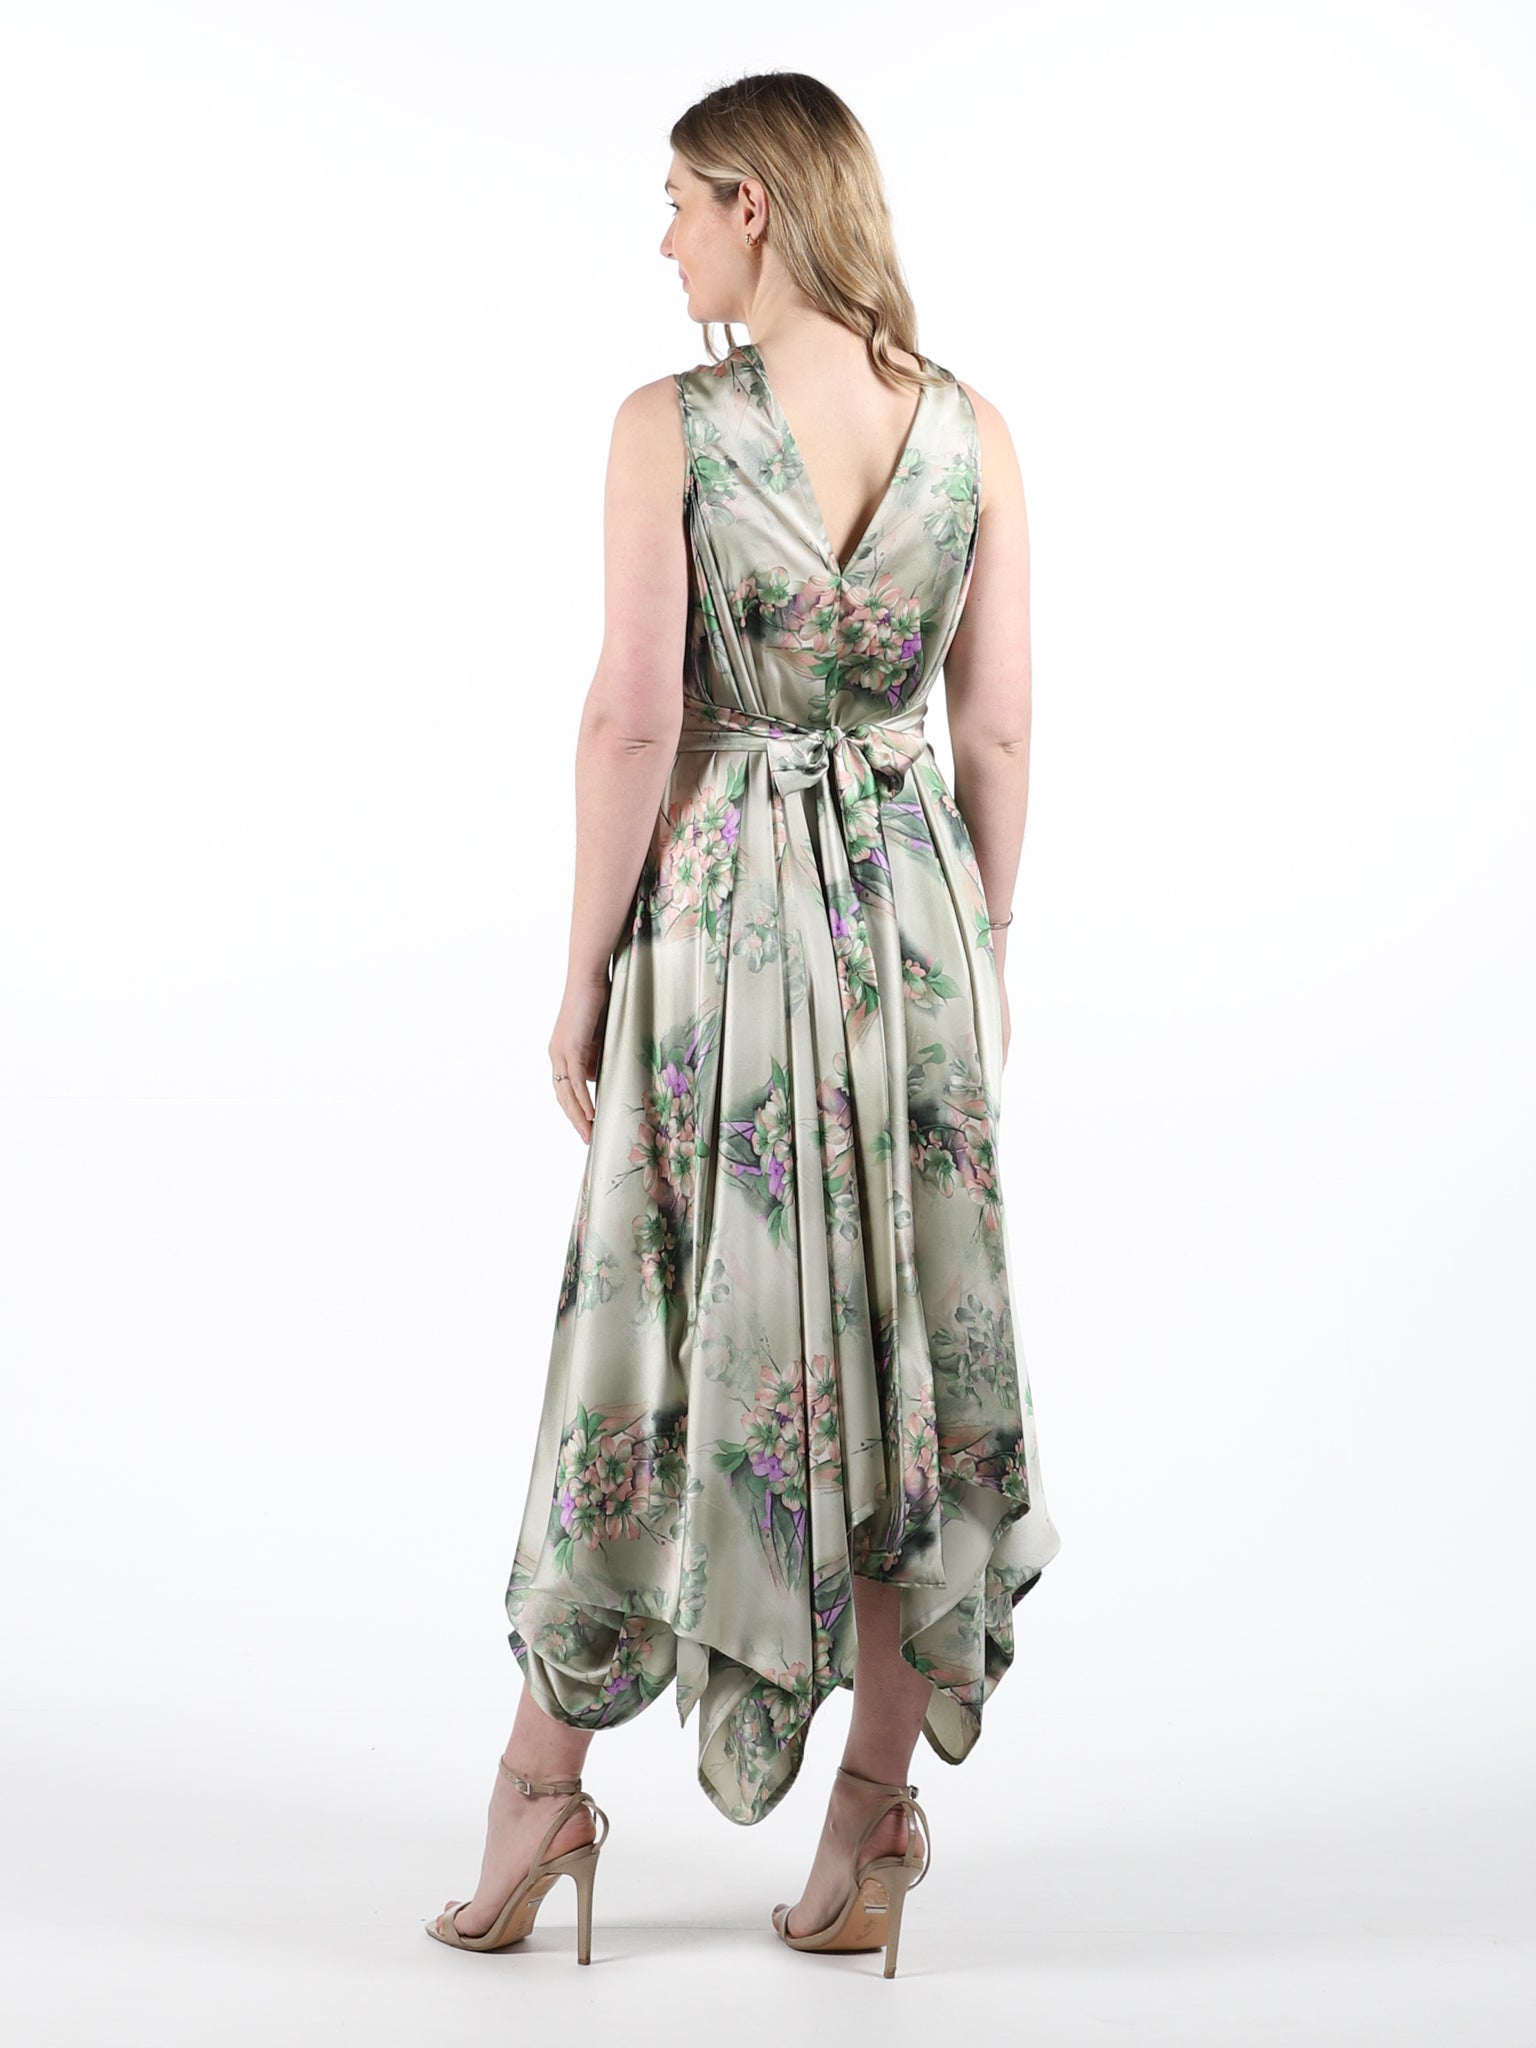 Sage Olivia Floral Darcy Dress (worn back to front)